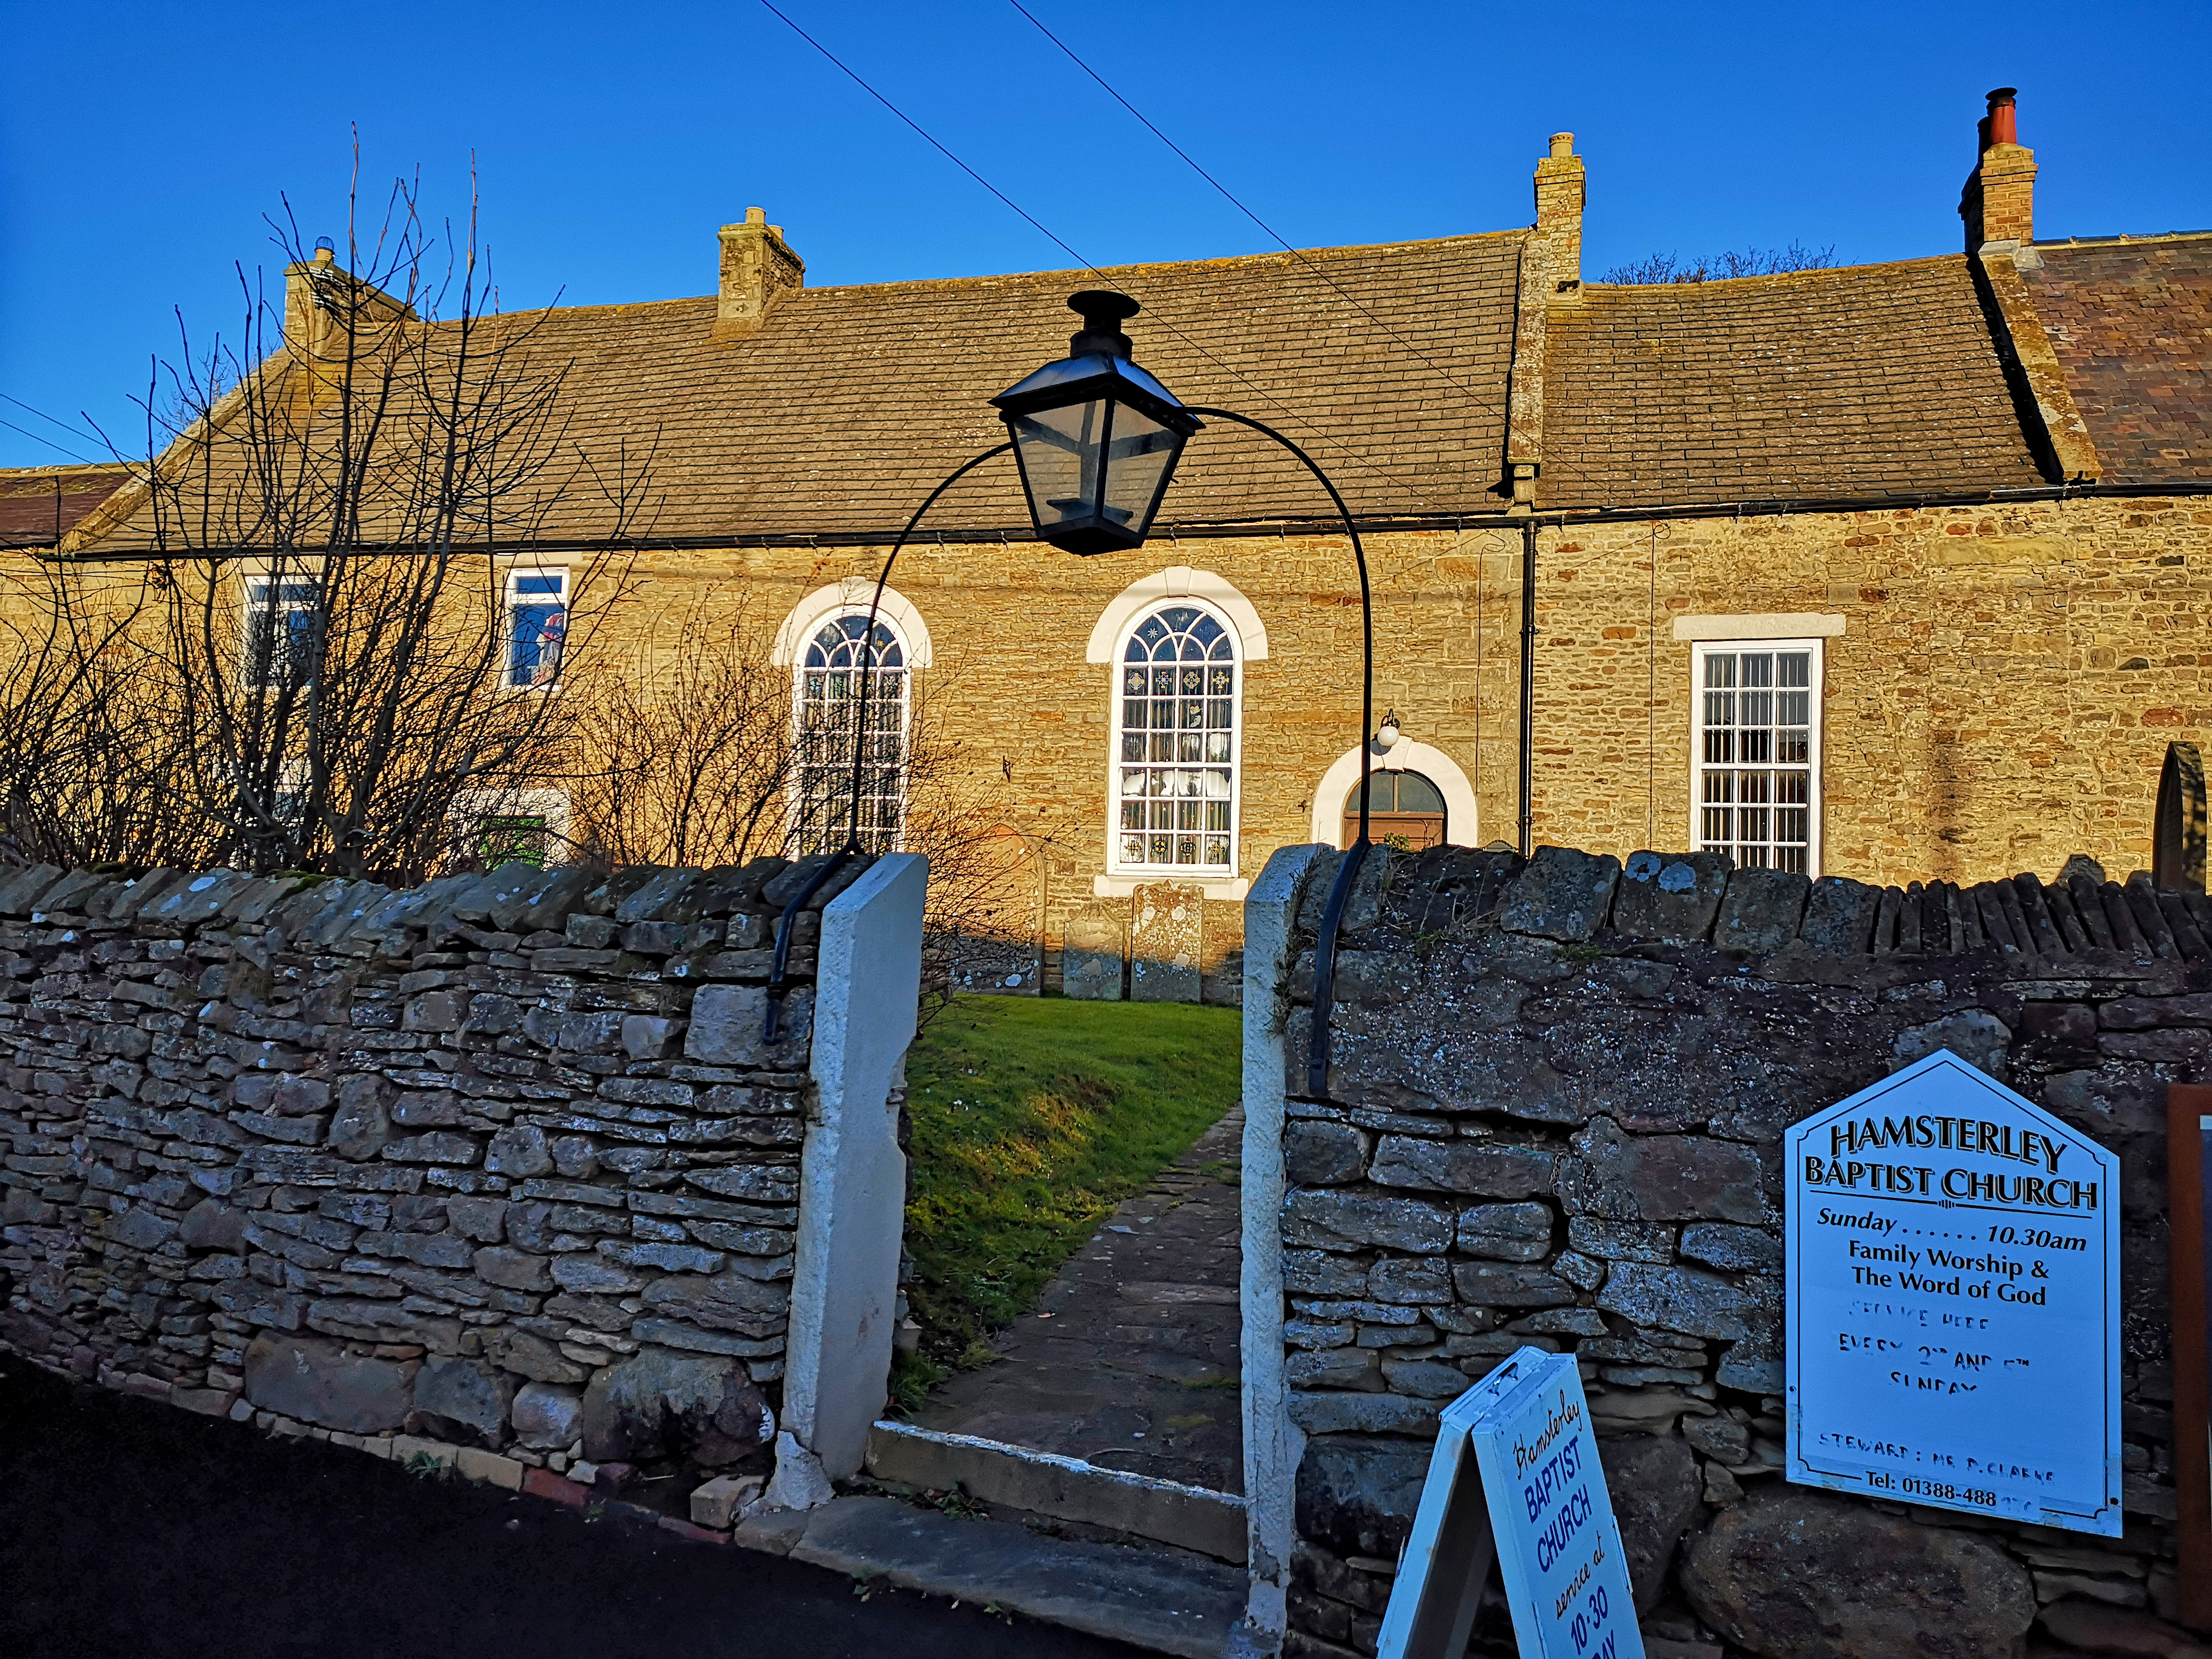 Hamsterley Baptist Church
